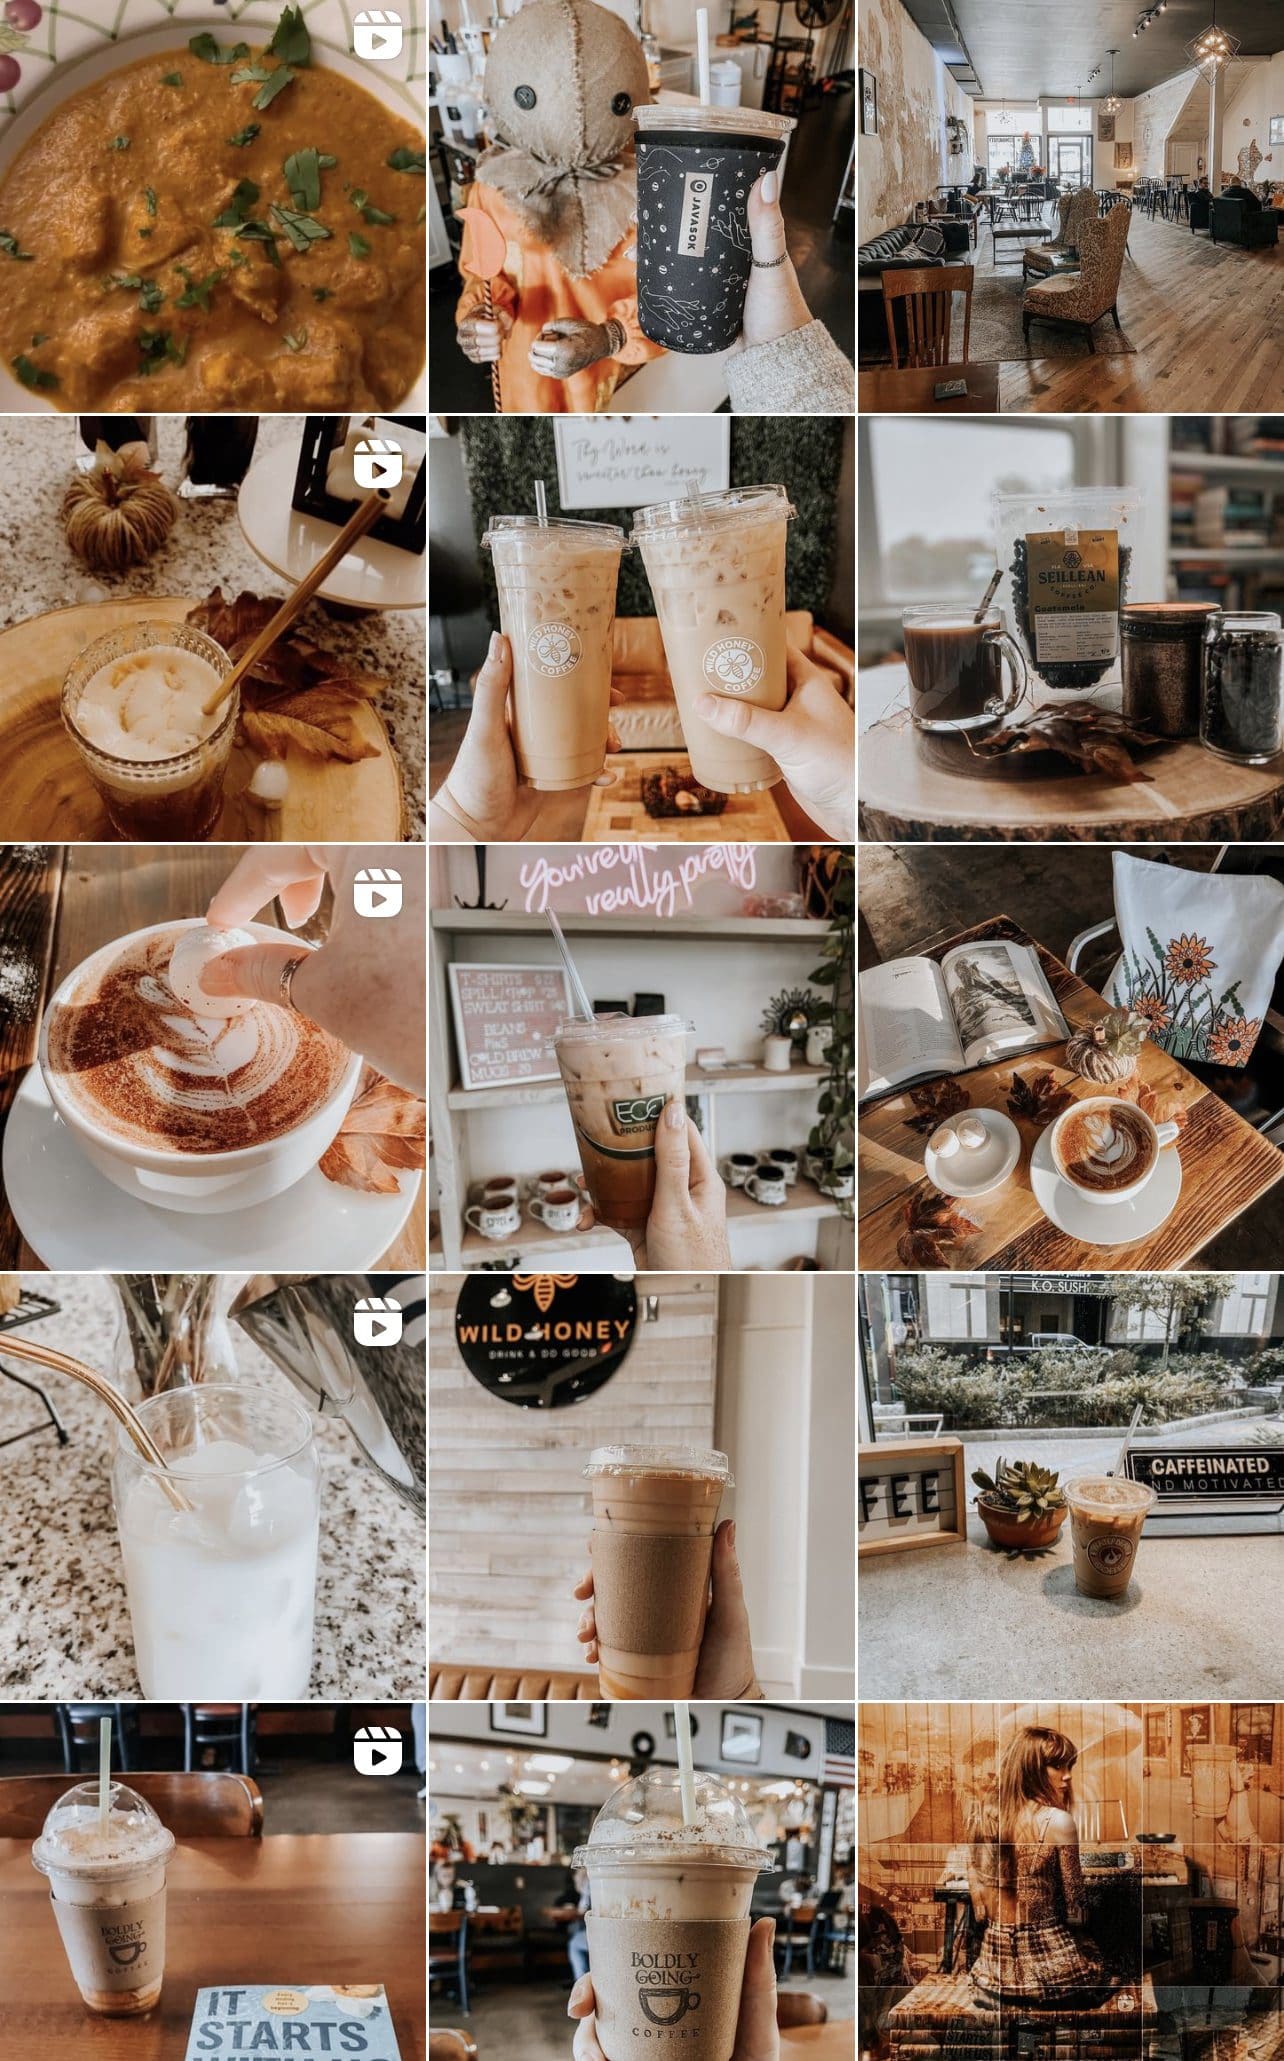 Instagram Account @caffeinaided